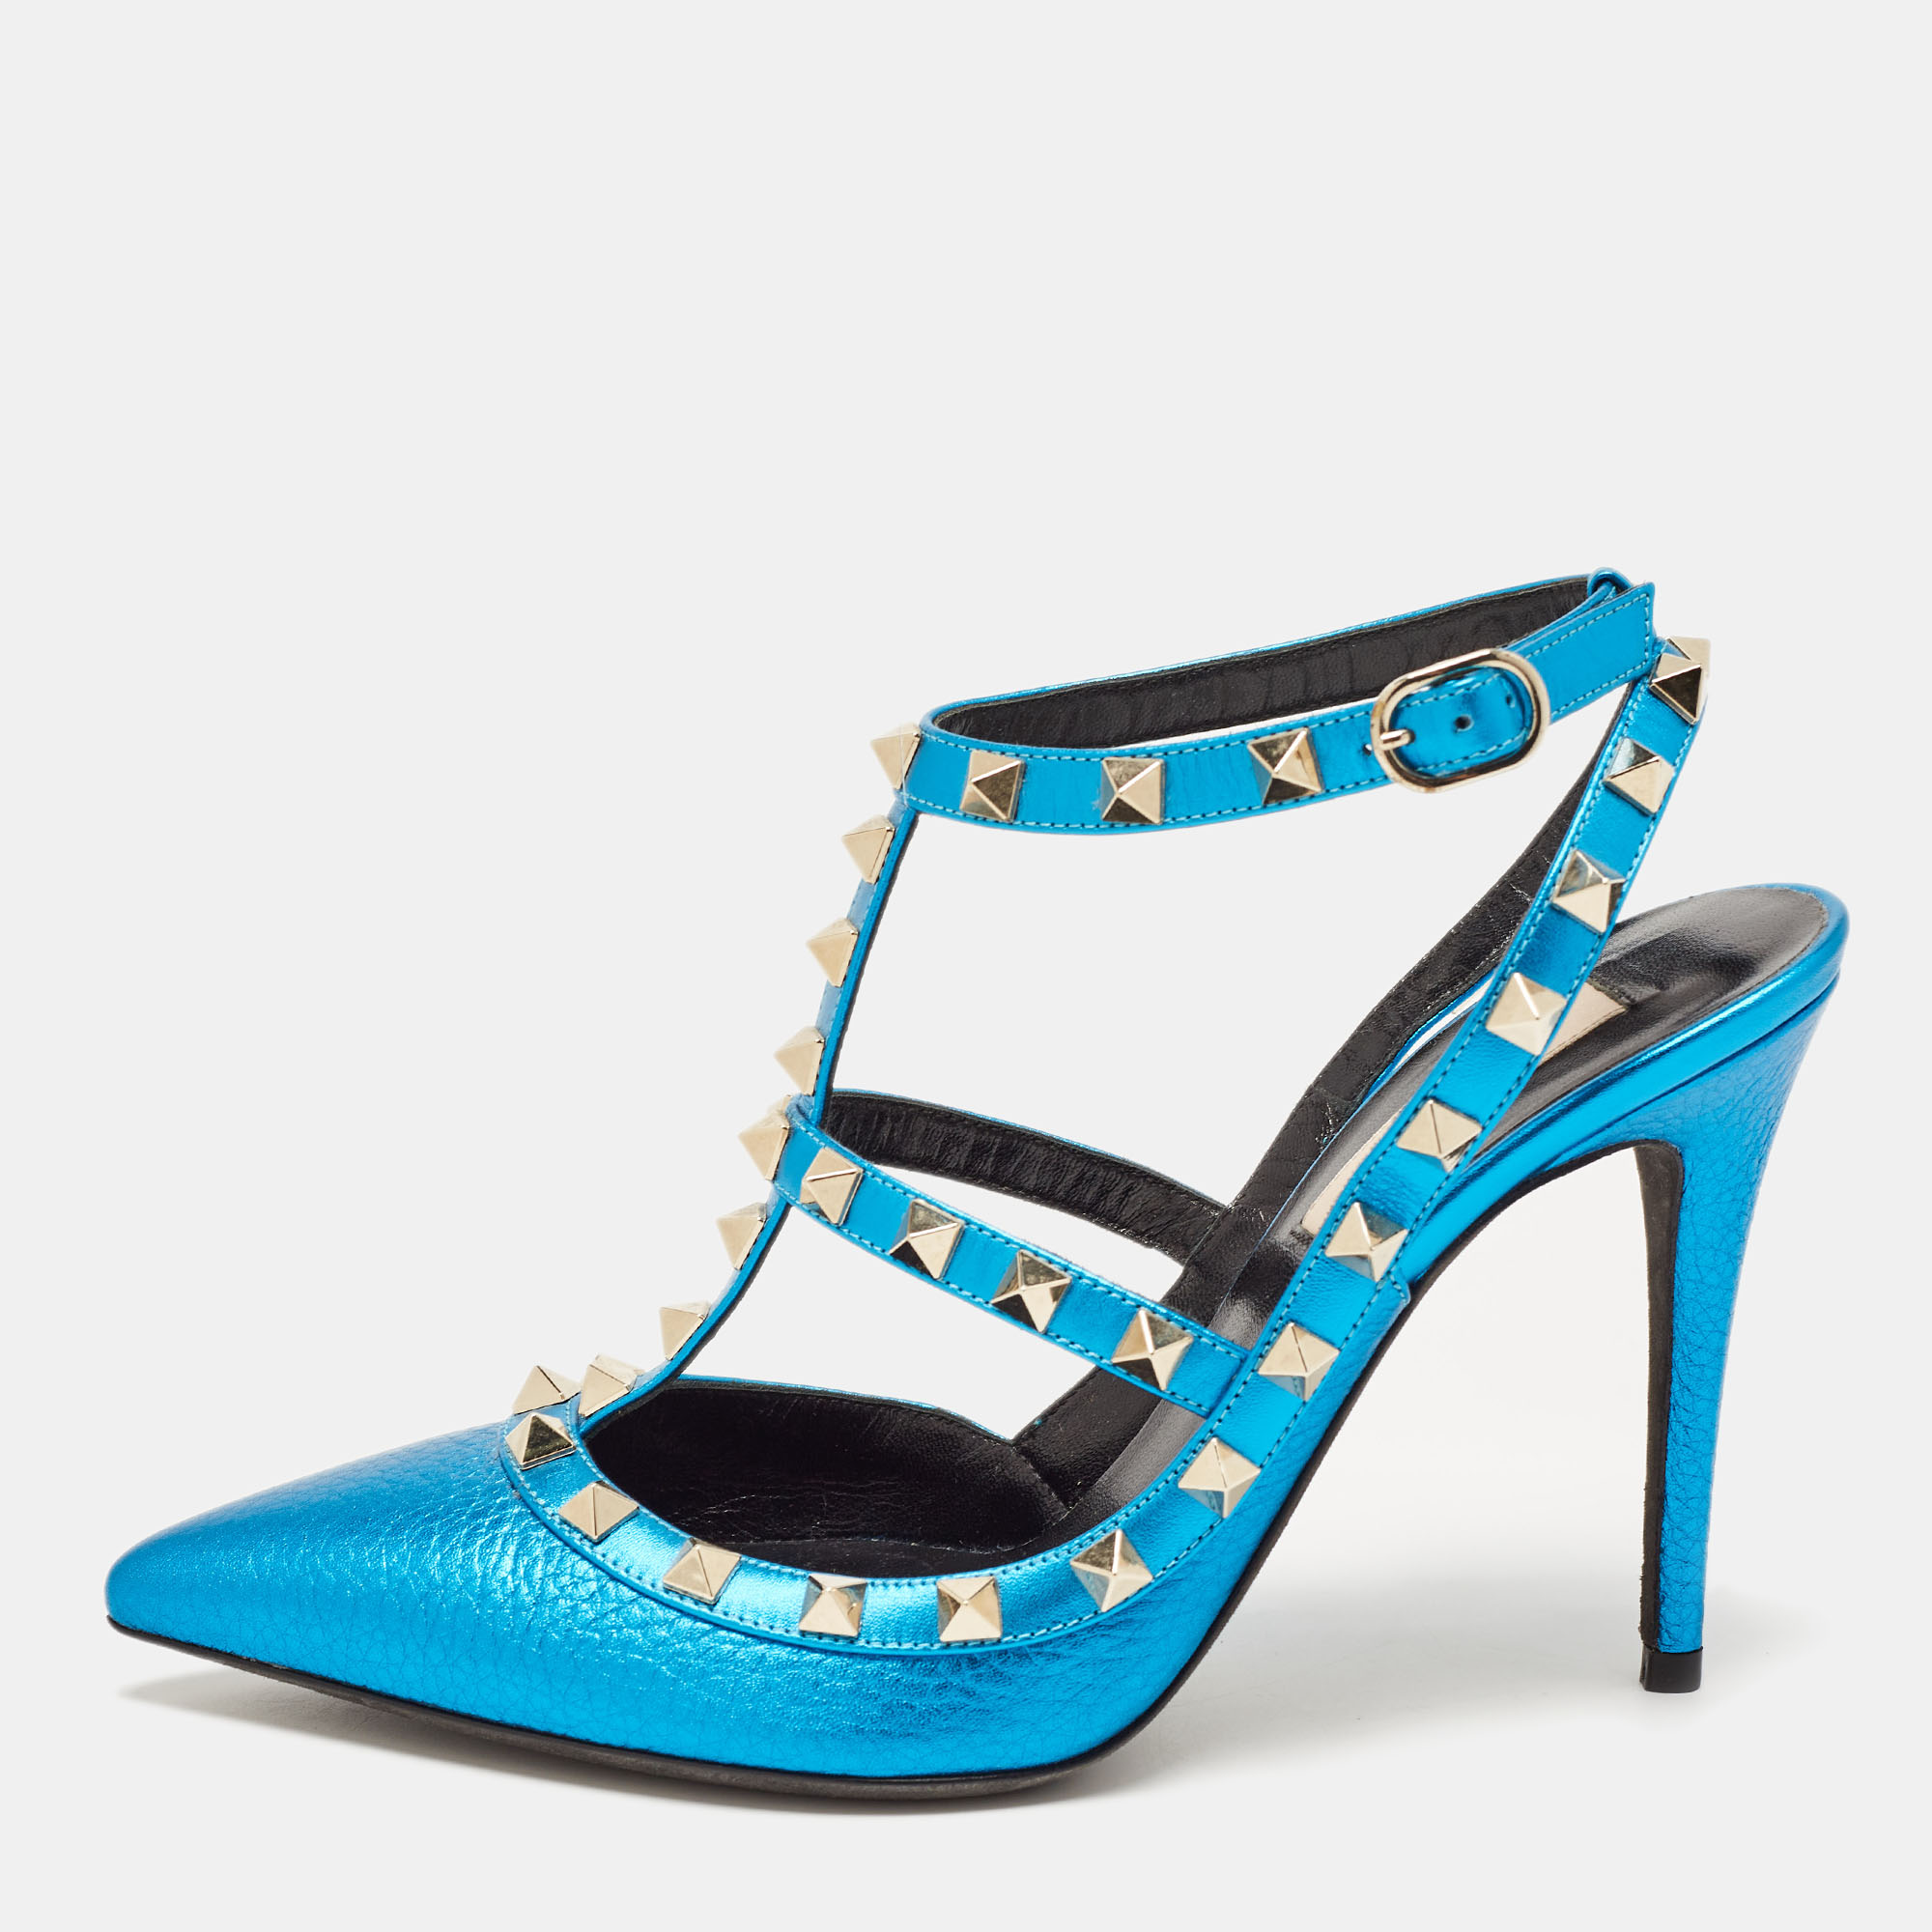 Valentino metallic blue leather rockstud ankle strap pumps size 37.5